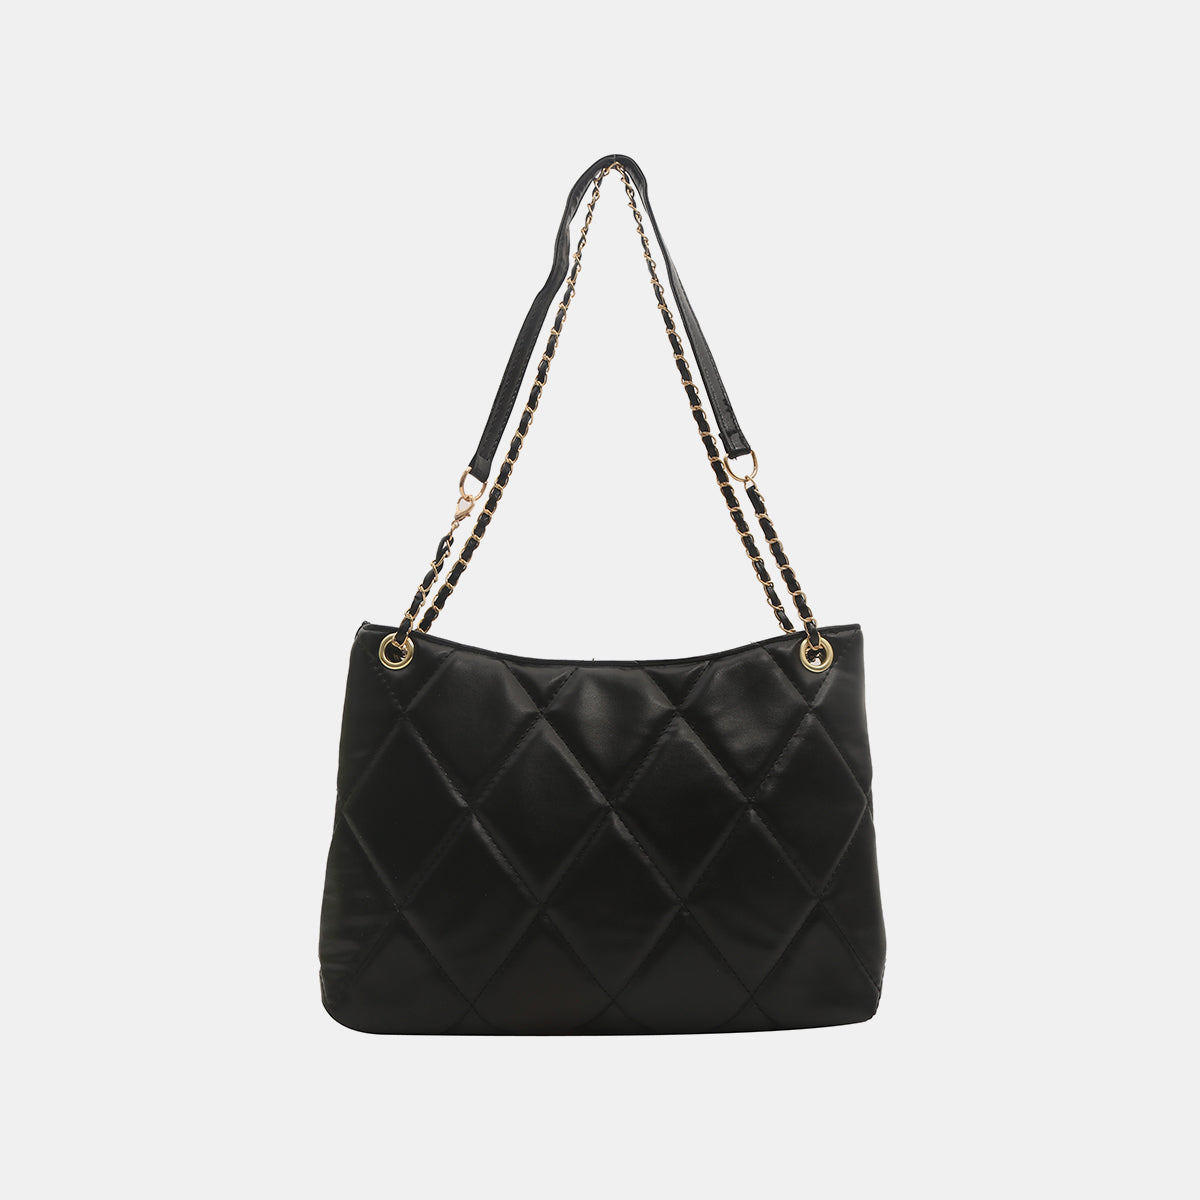 PU Leather Medium Handbag Black One Size